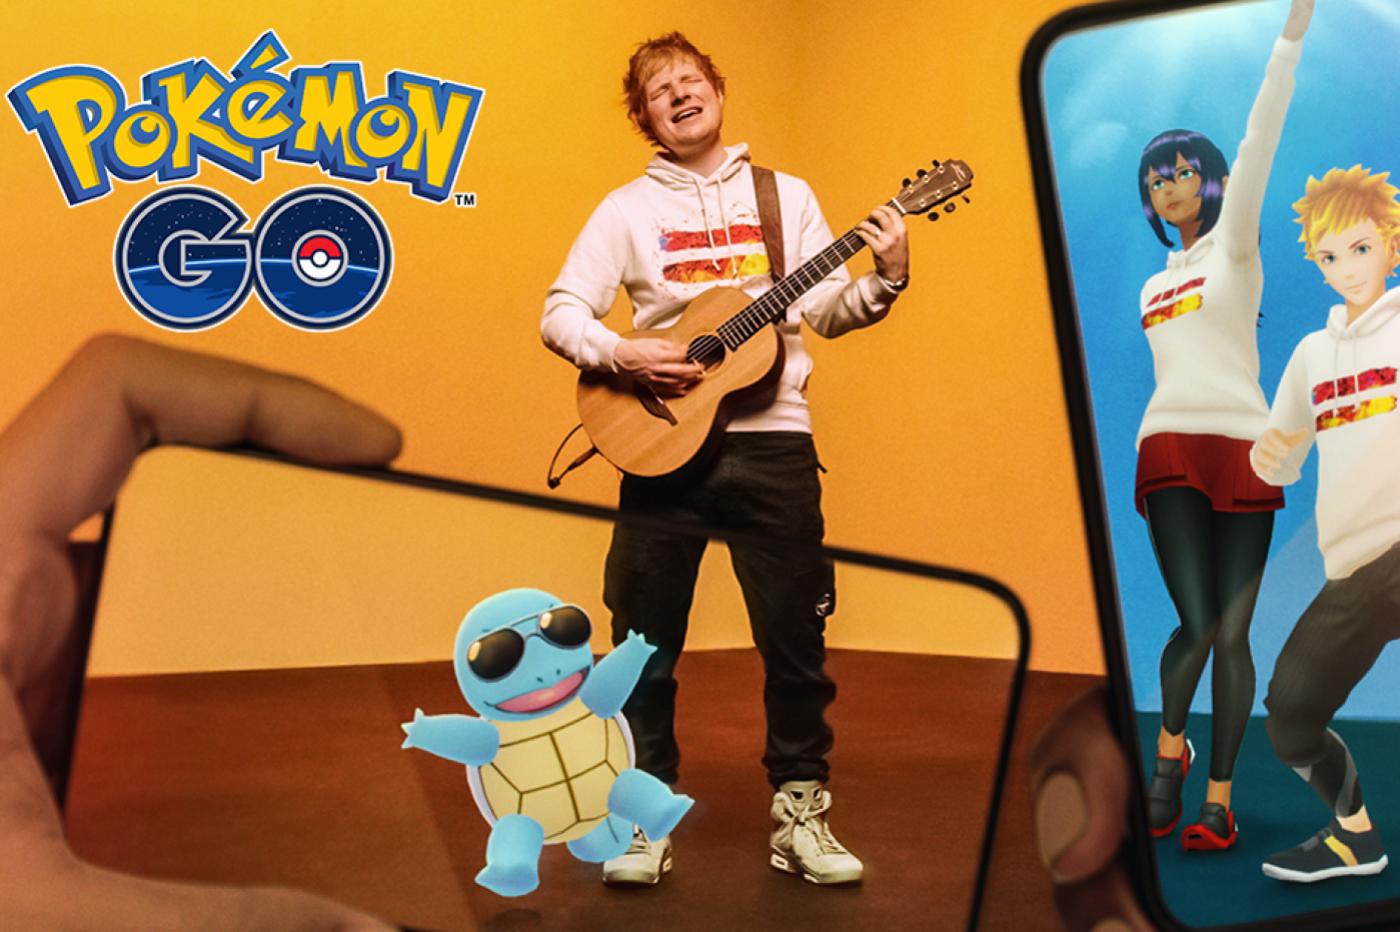 Ed sheeran pokemon go concert